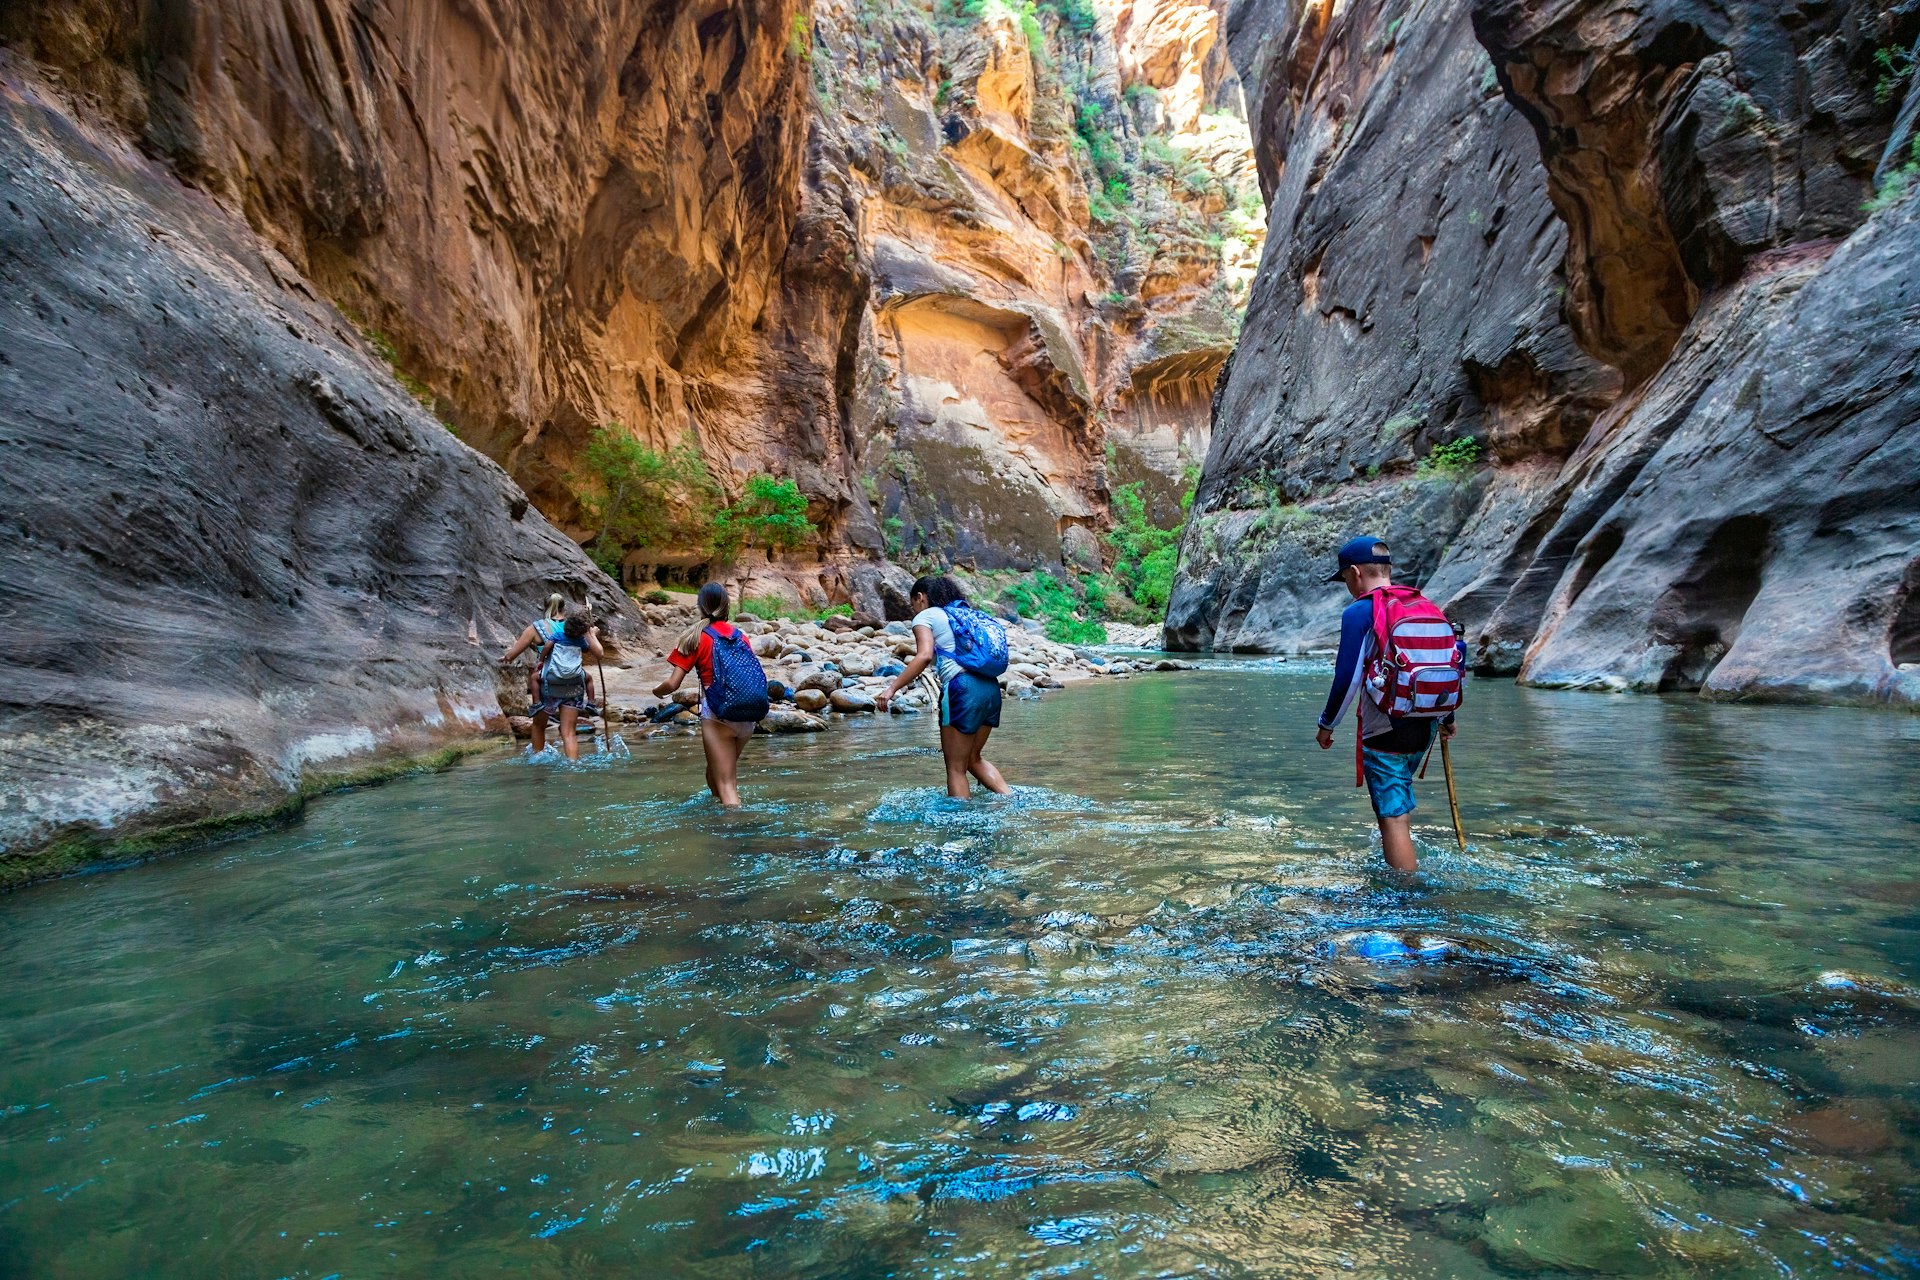 Hikers wade through a river in a narrow slot canyon